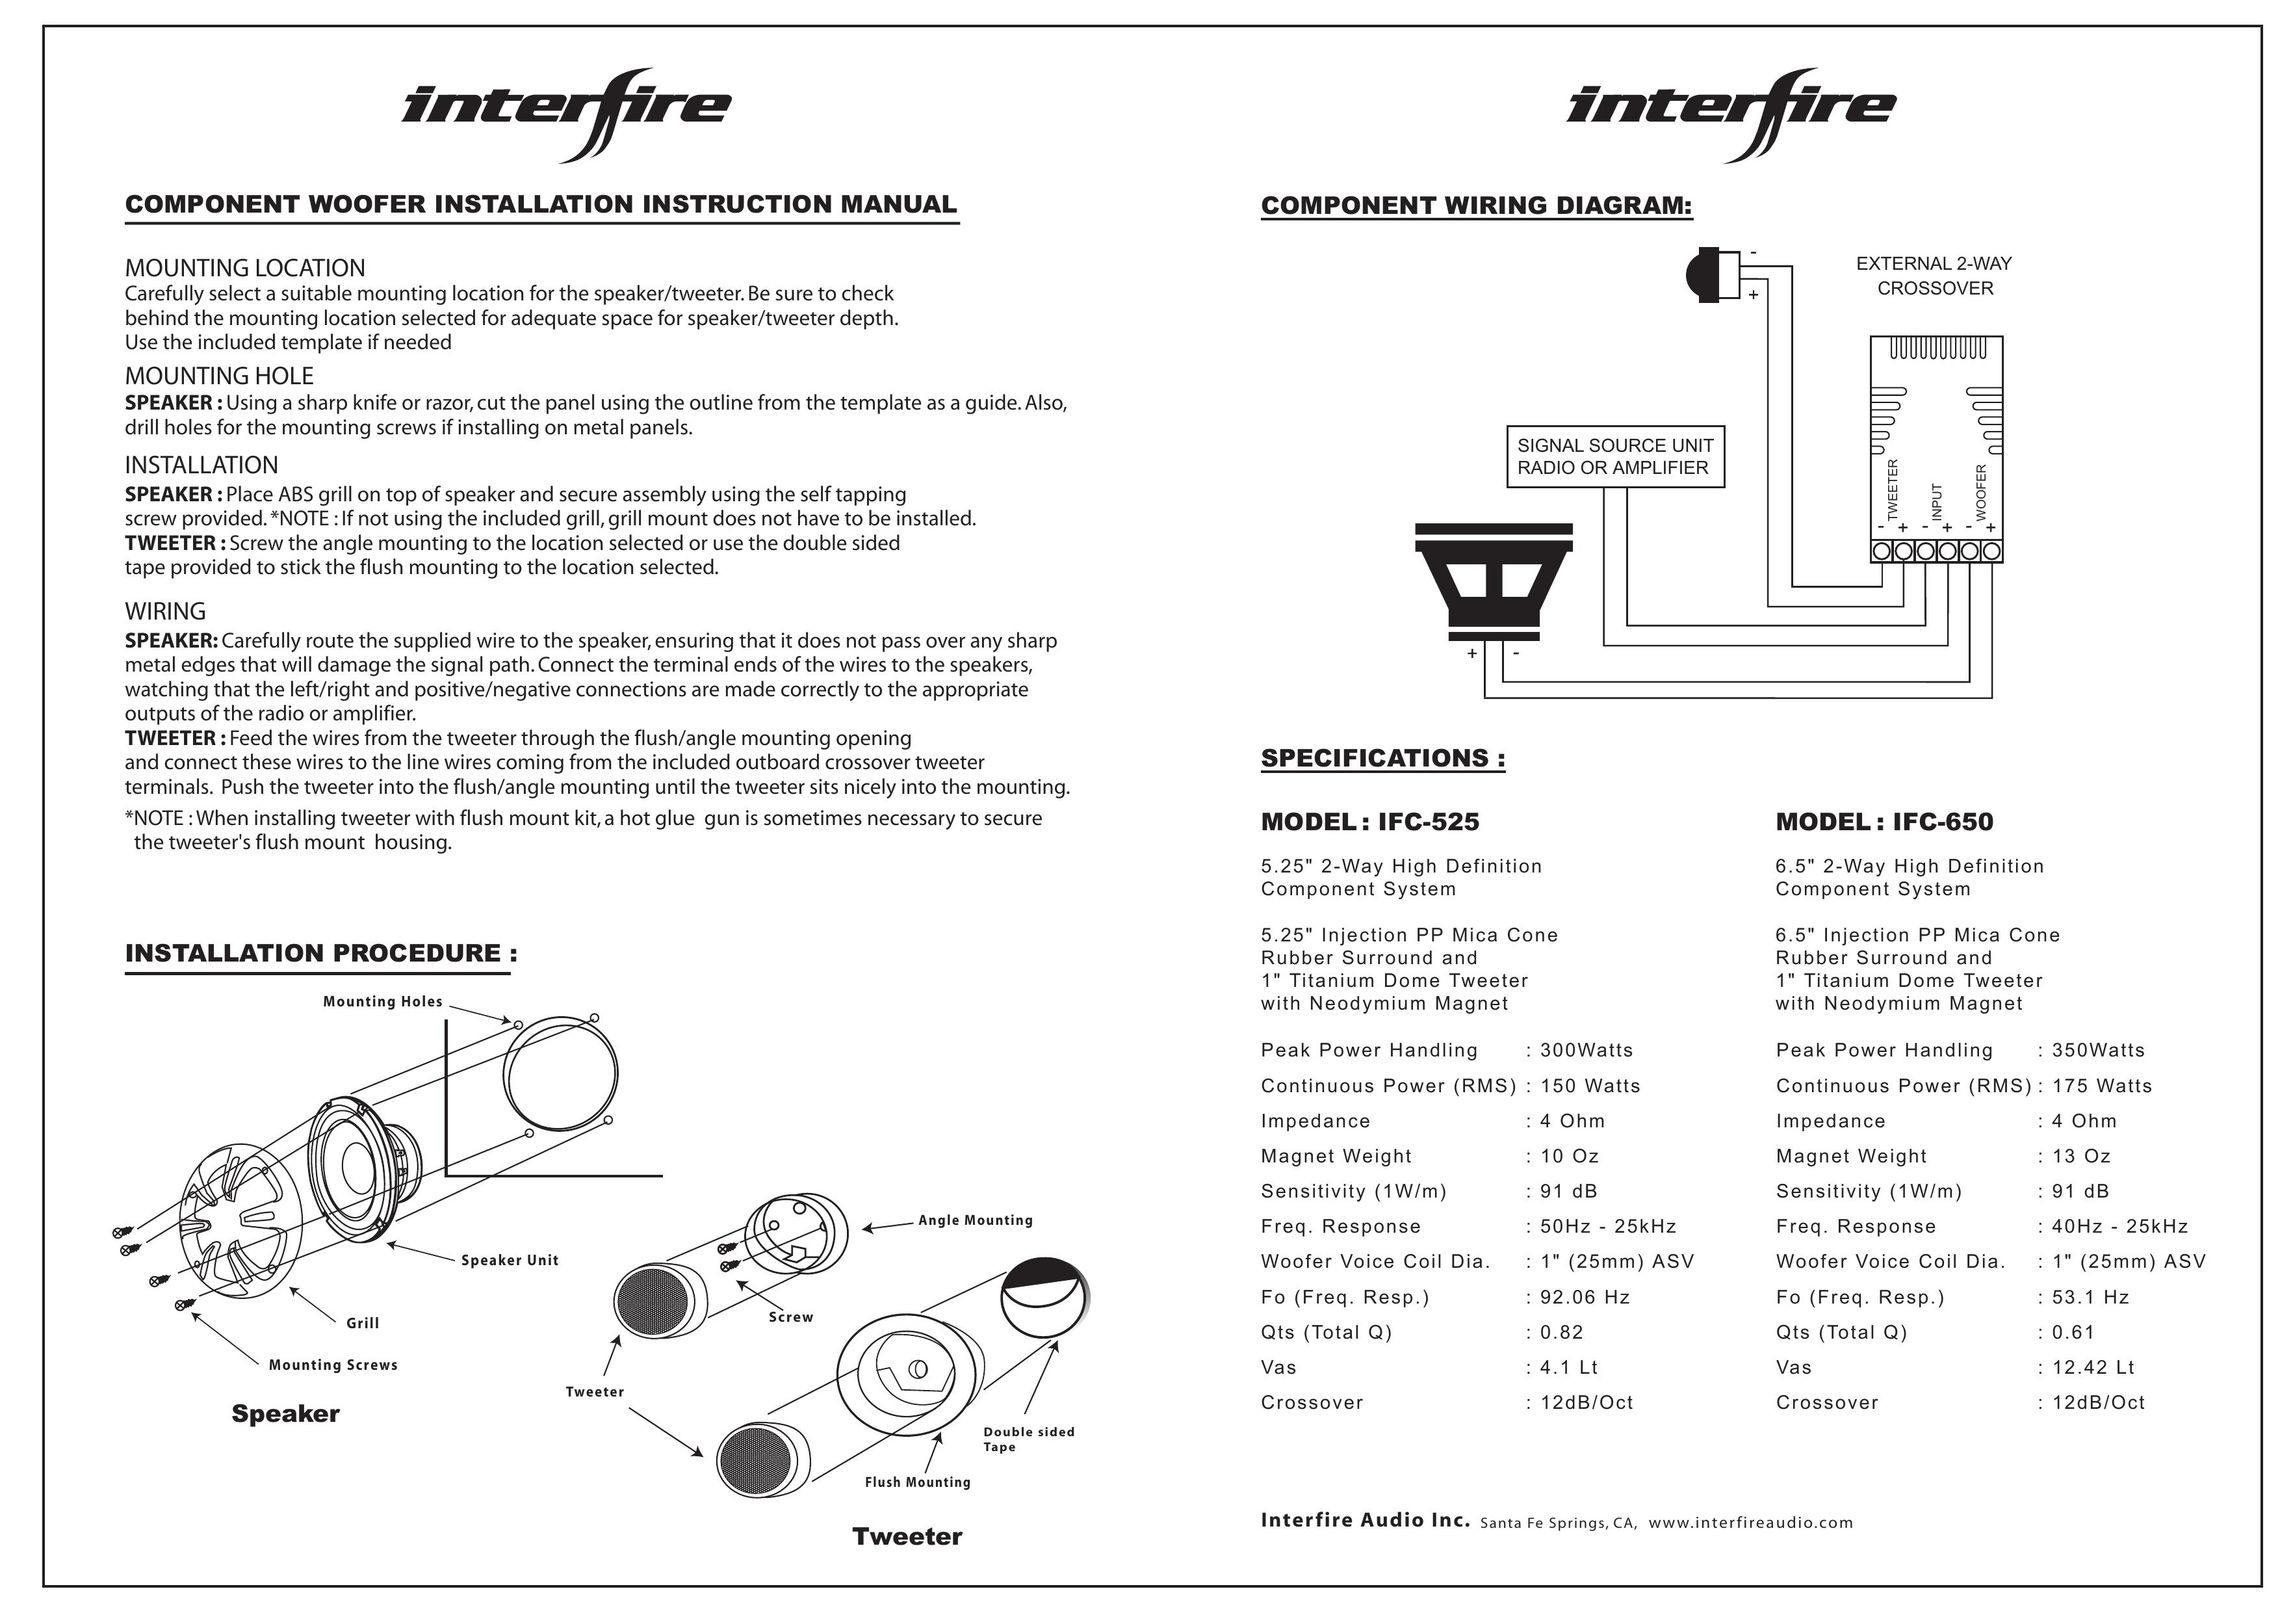 Interfire Audio IFC-650 Speaker User Manual